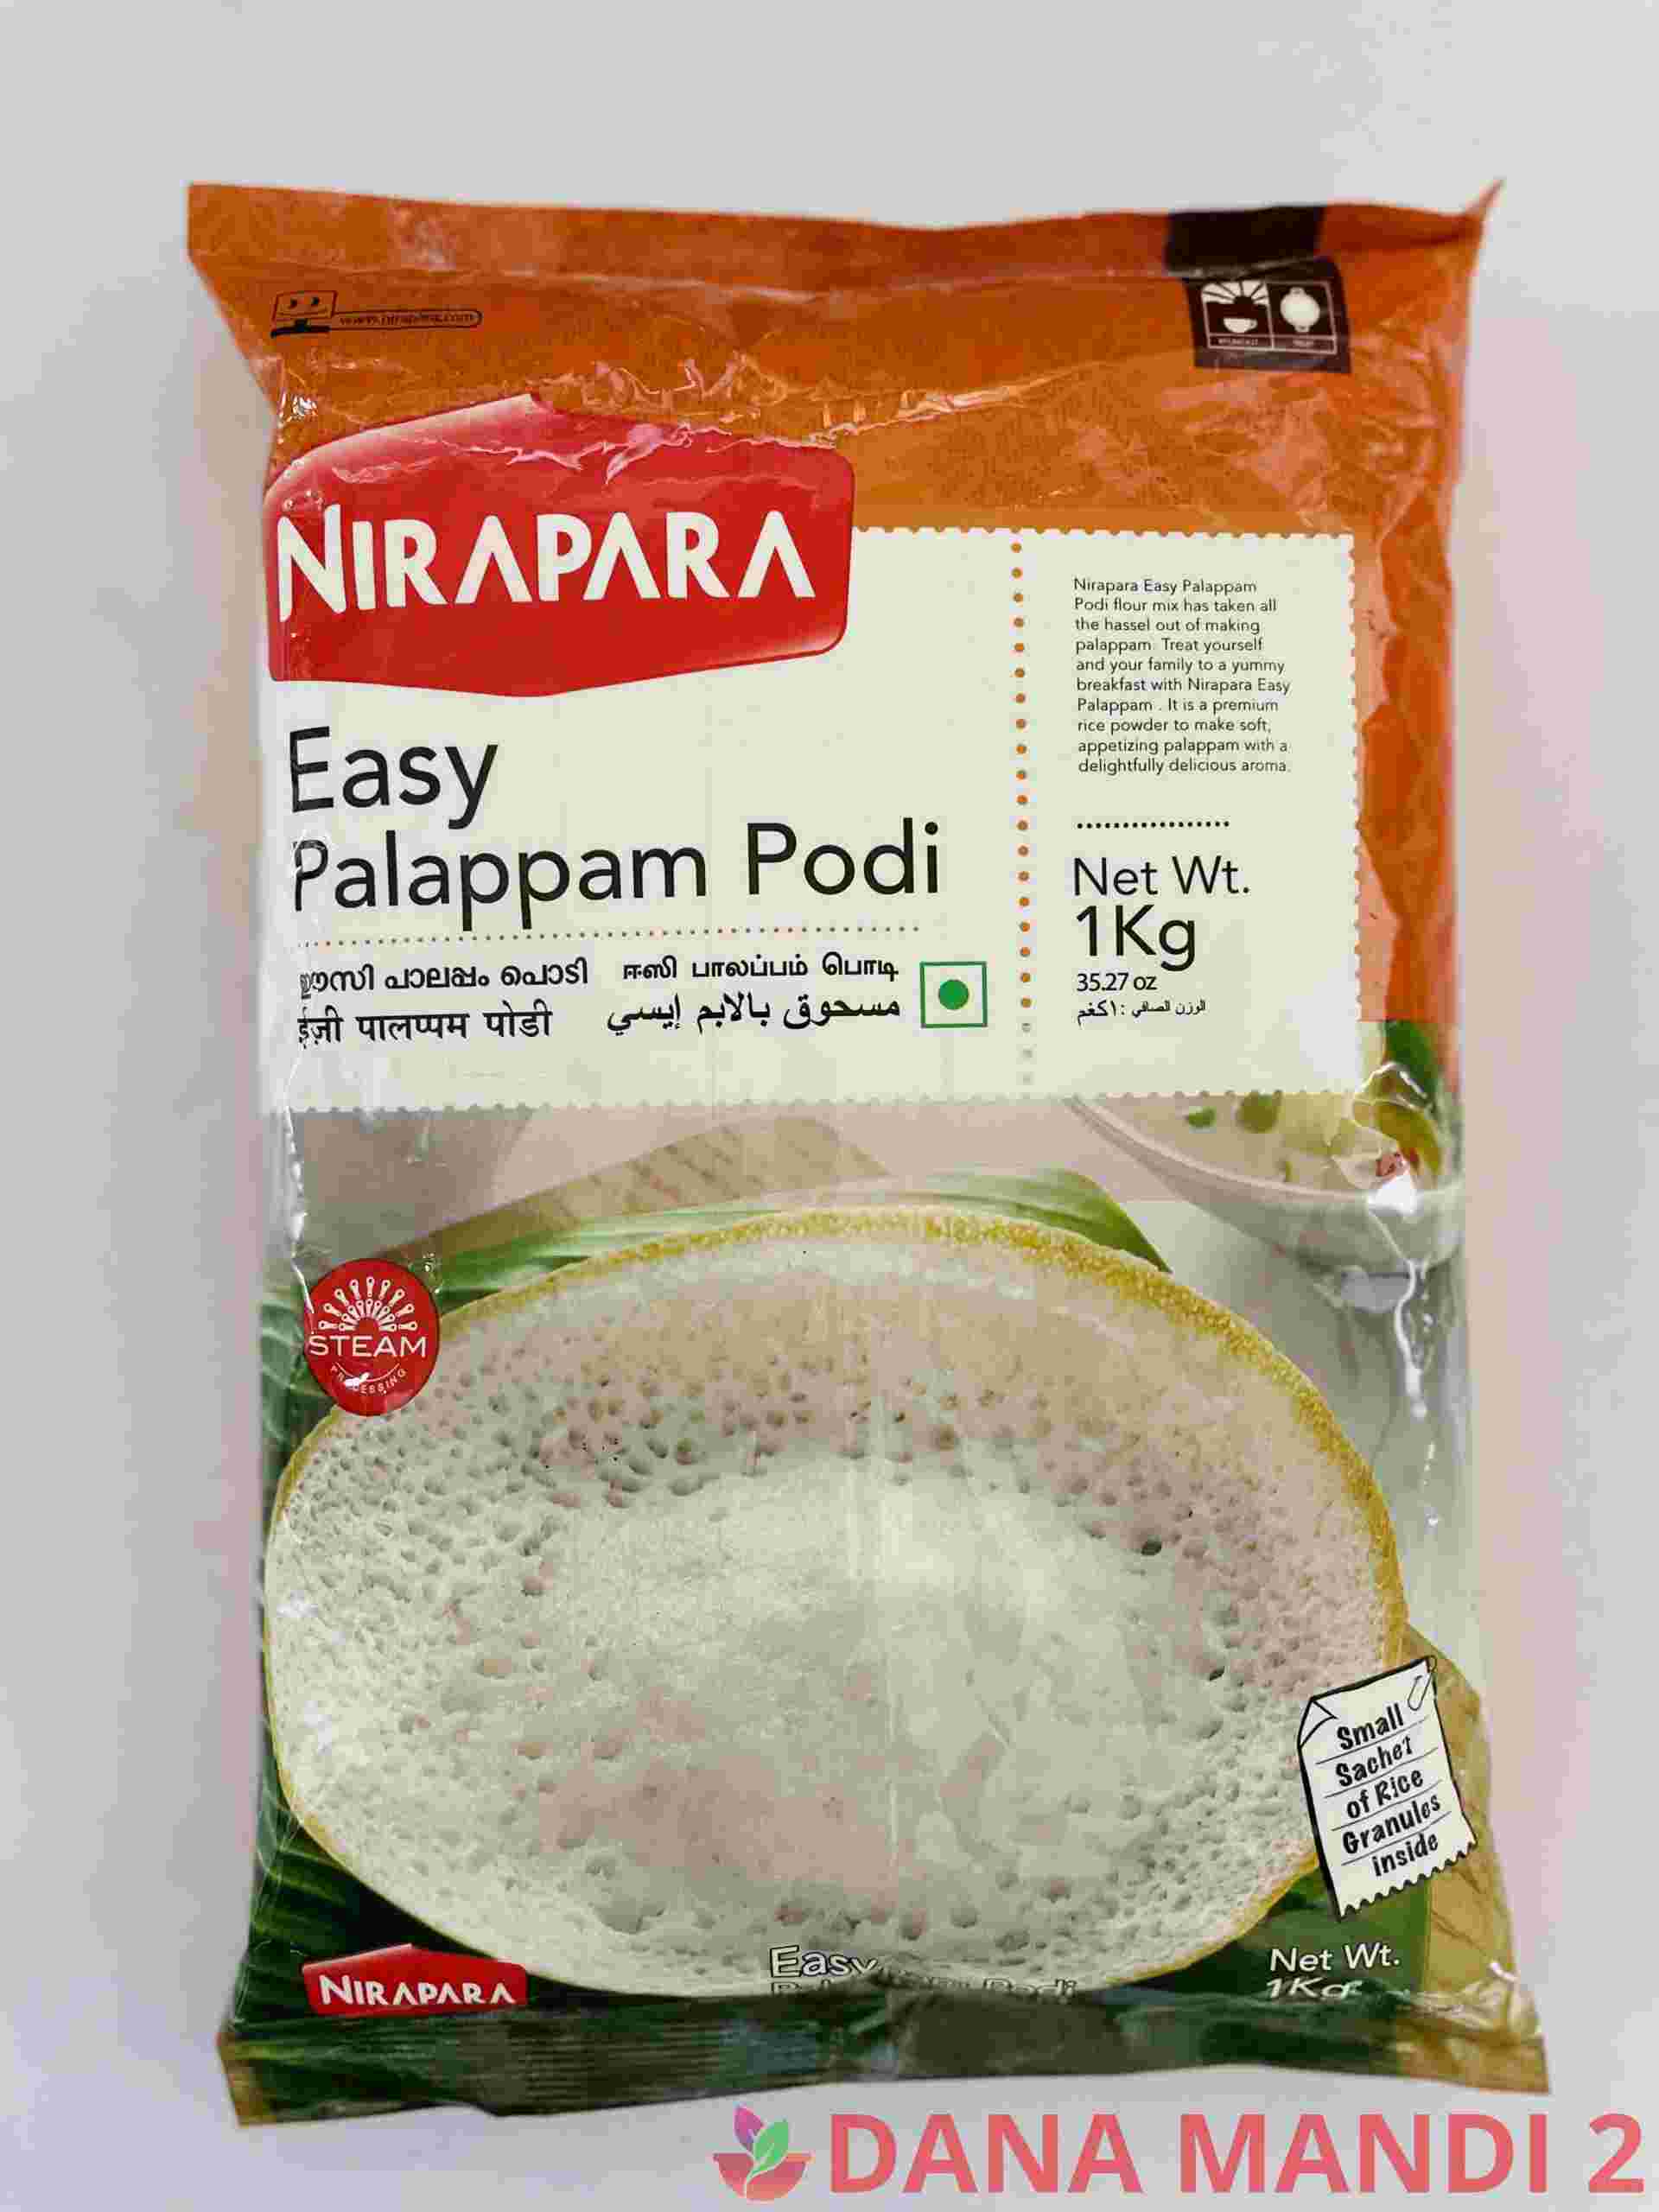 Narapara Easy Palappam Podi